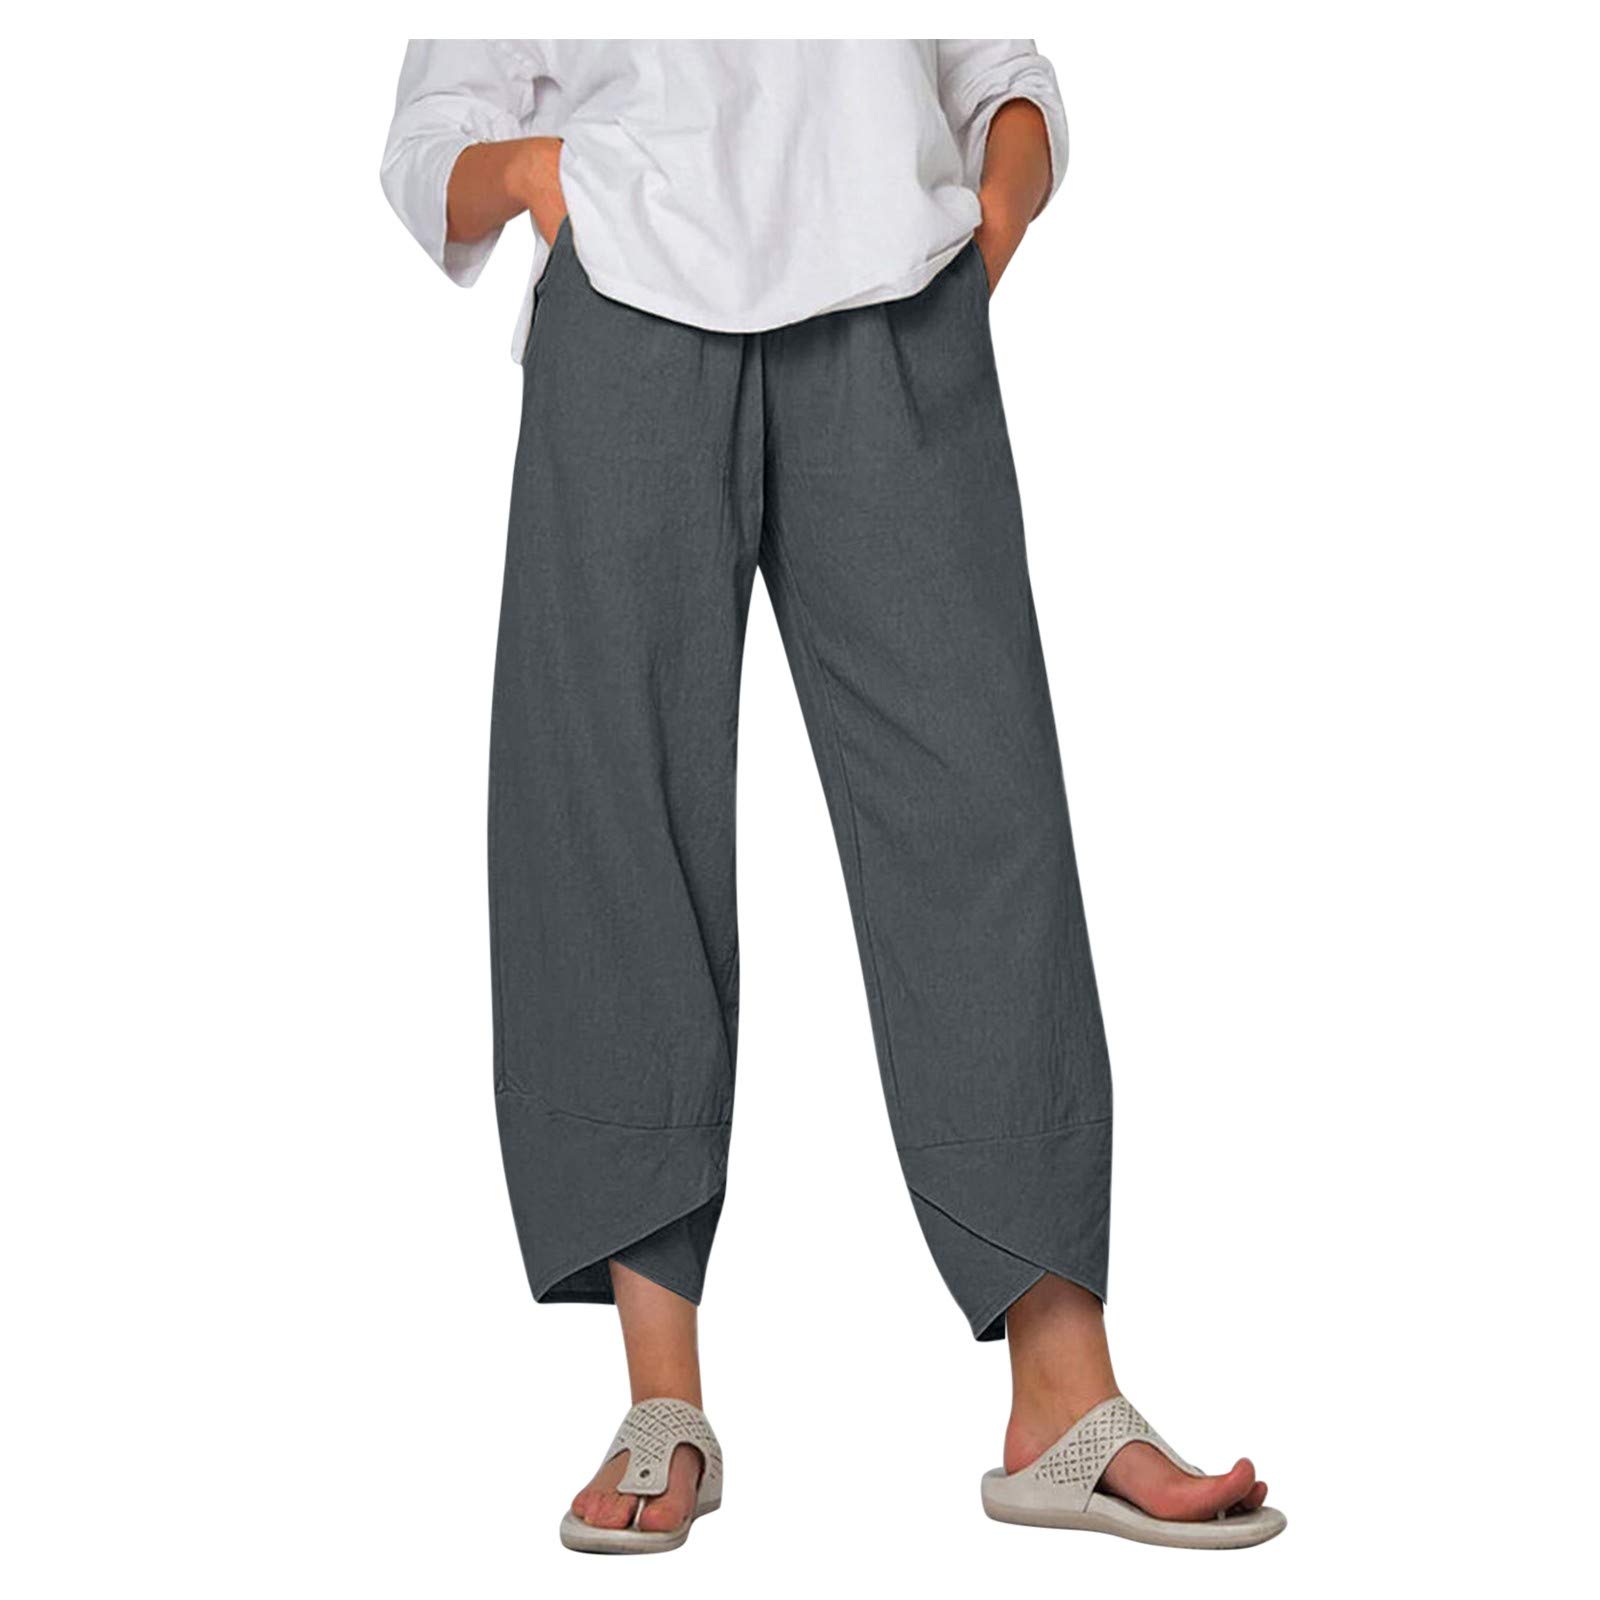 Plus Size Pull-on Jeans for Women Thin Petite Full Length Mom High Waist  Elastic Loose Harem Pants